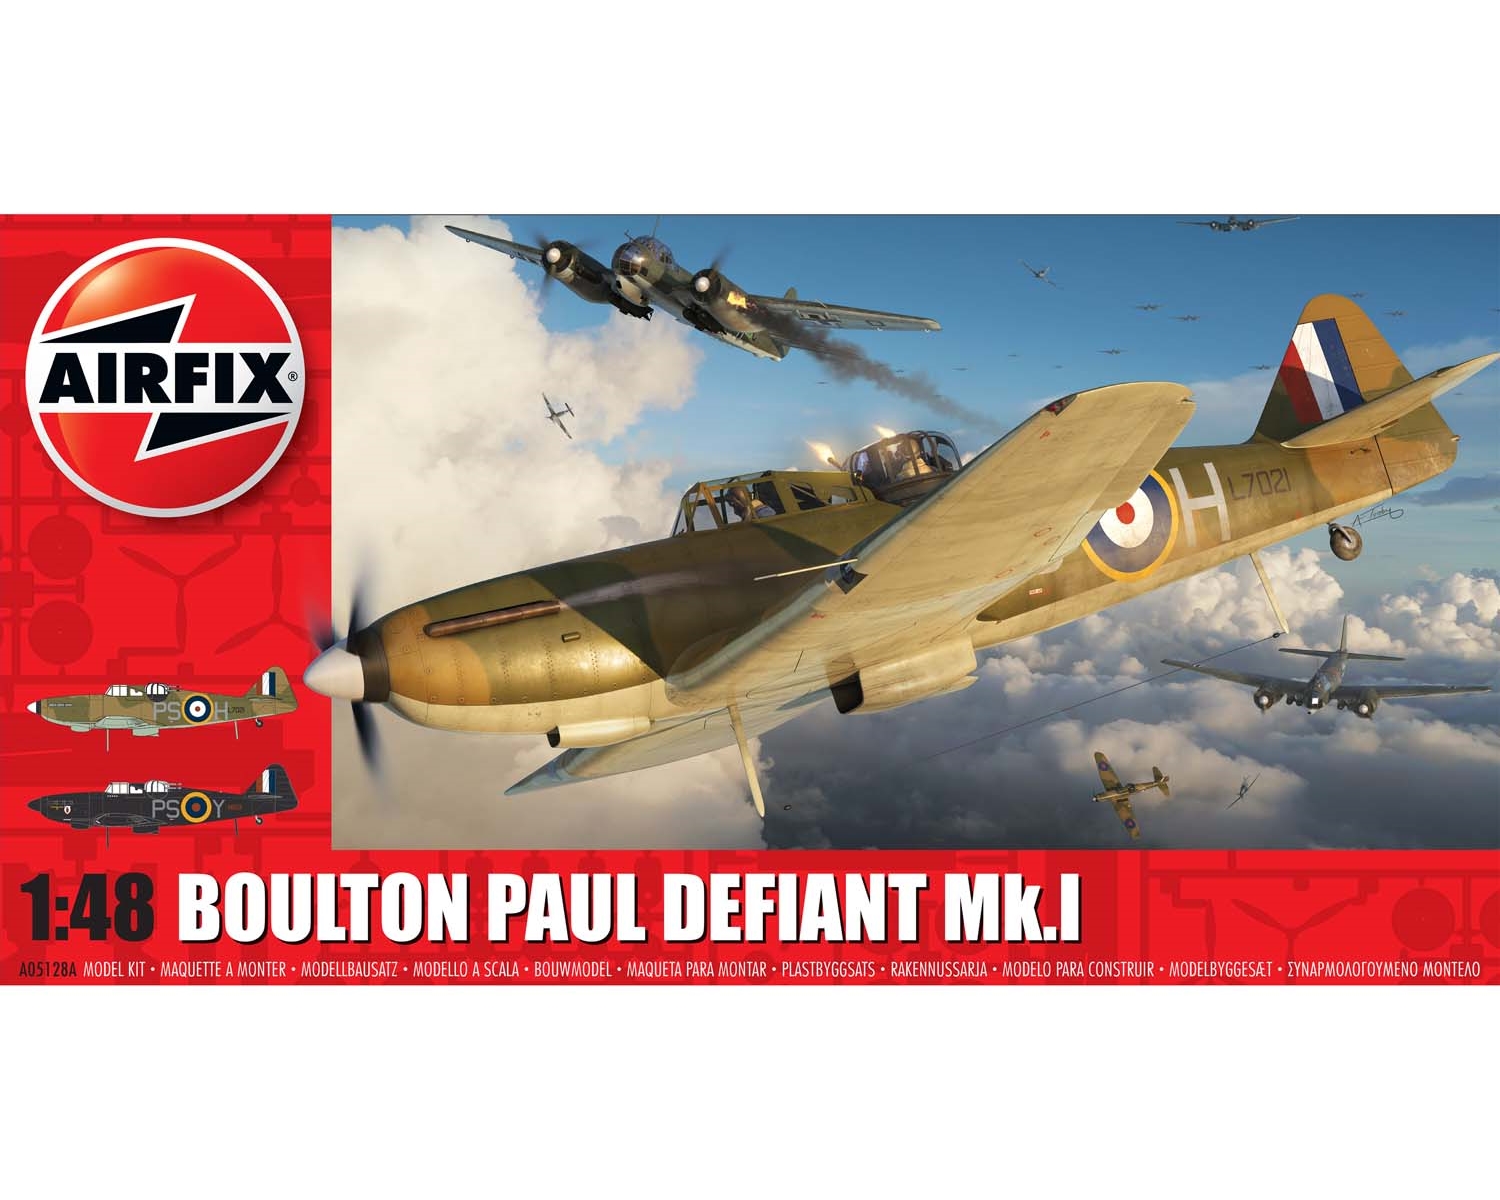 Airfix 05128A - BOULTON PAUL DEFIANT MK.1